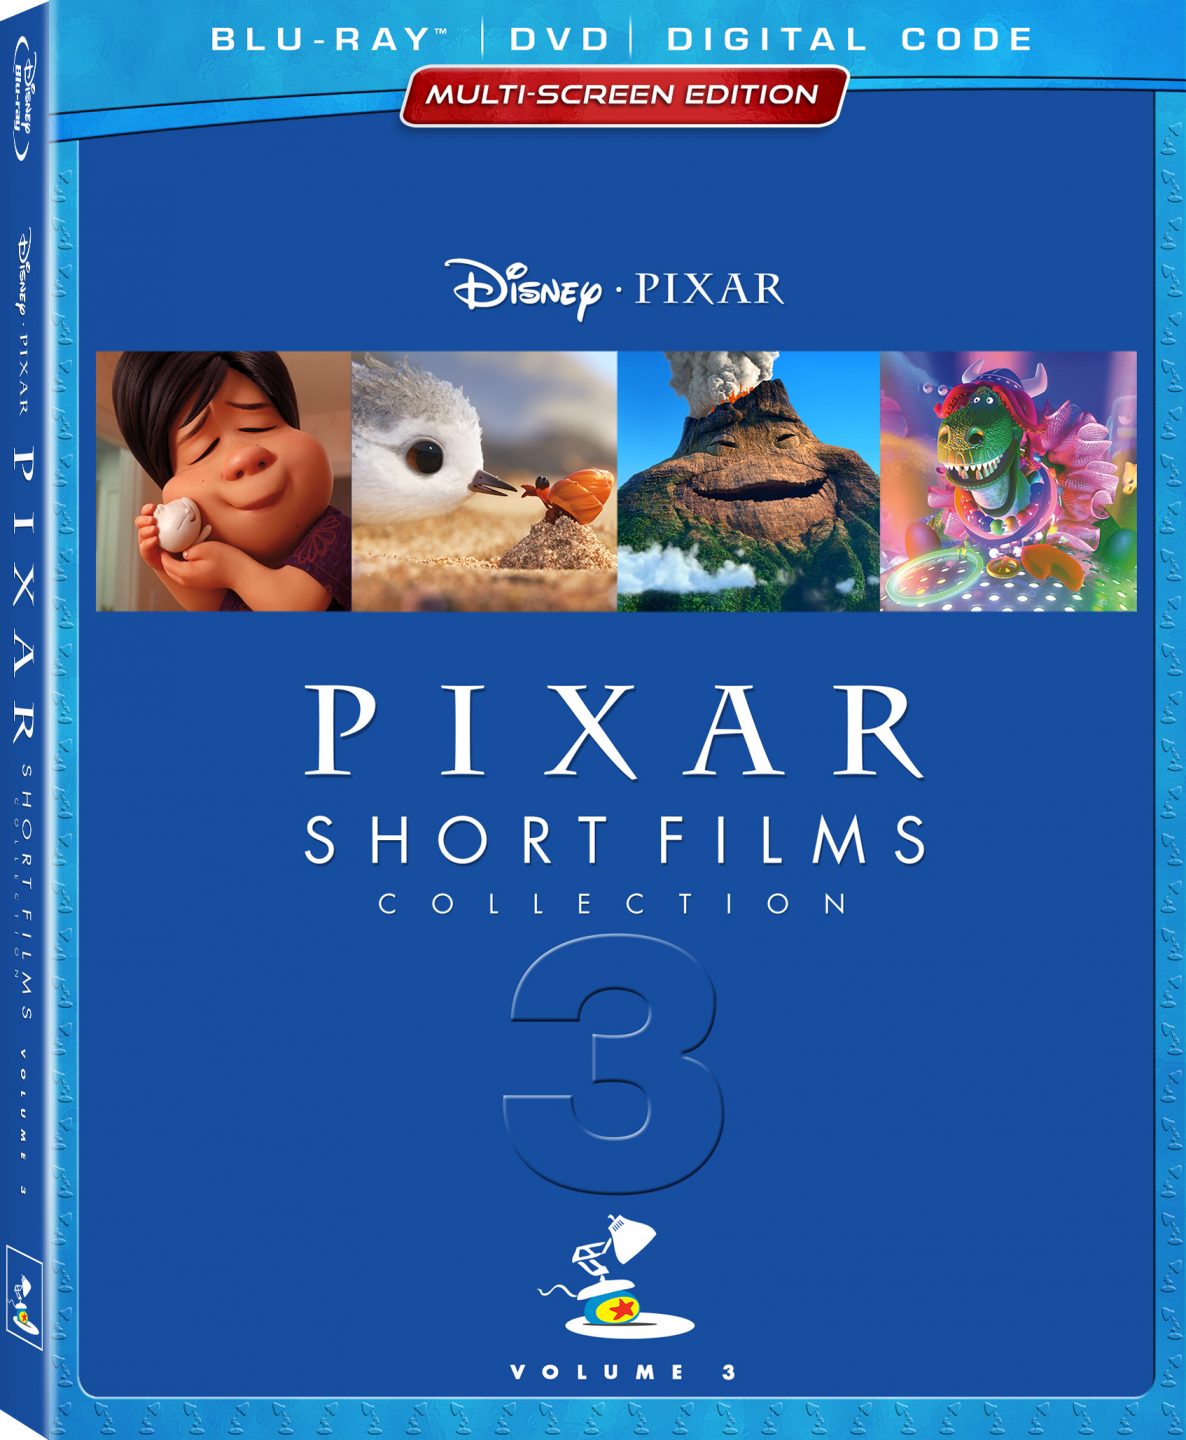 Disney And Pixar Short Films Collection Volume 3 (Walt Disney Studios Home Entertainment)